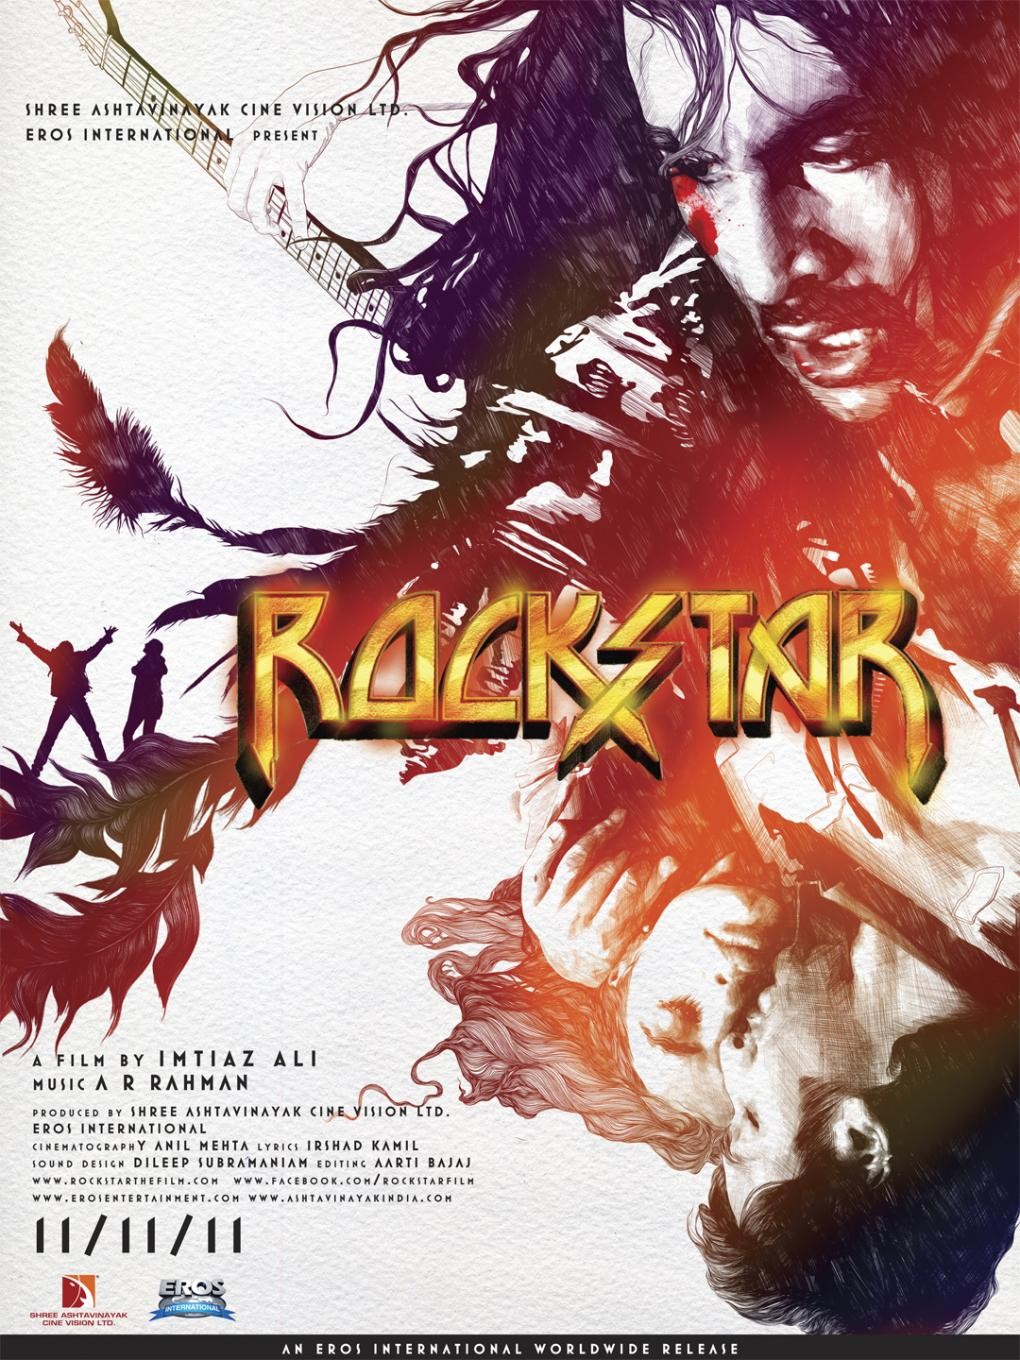 Rockstar Movie Poster - IMP Awards